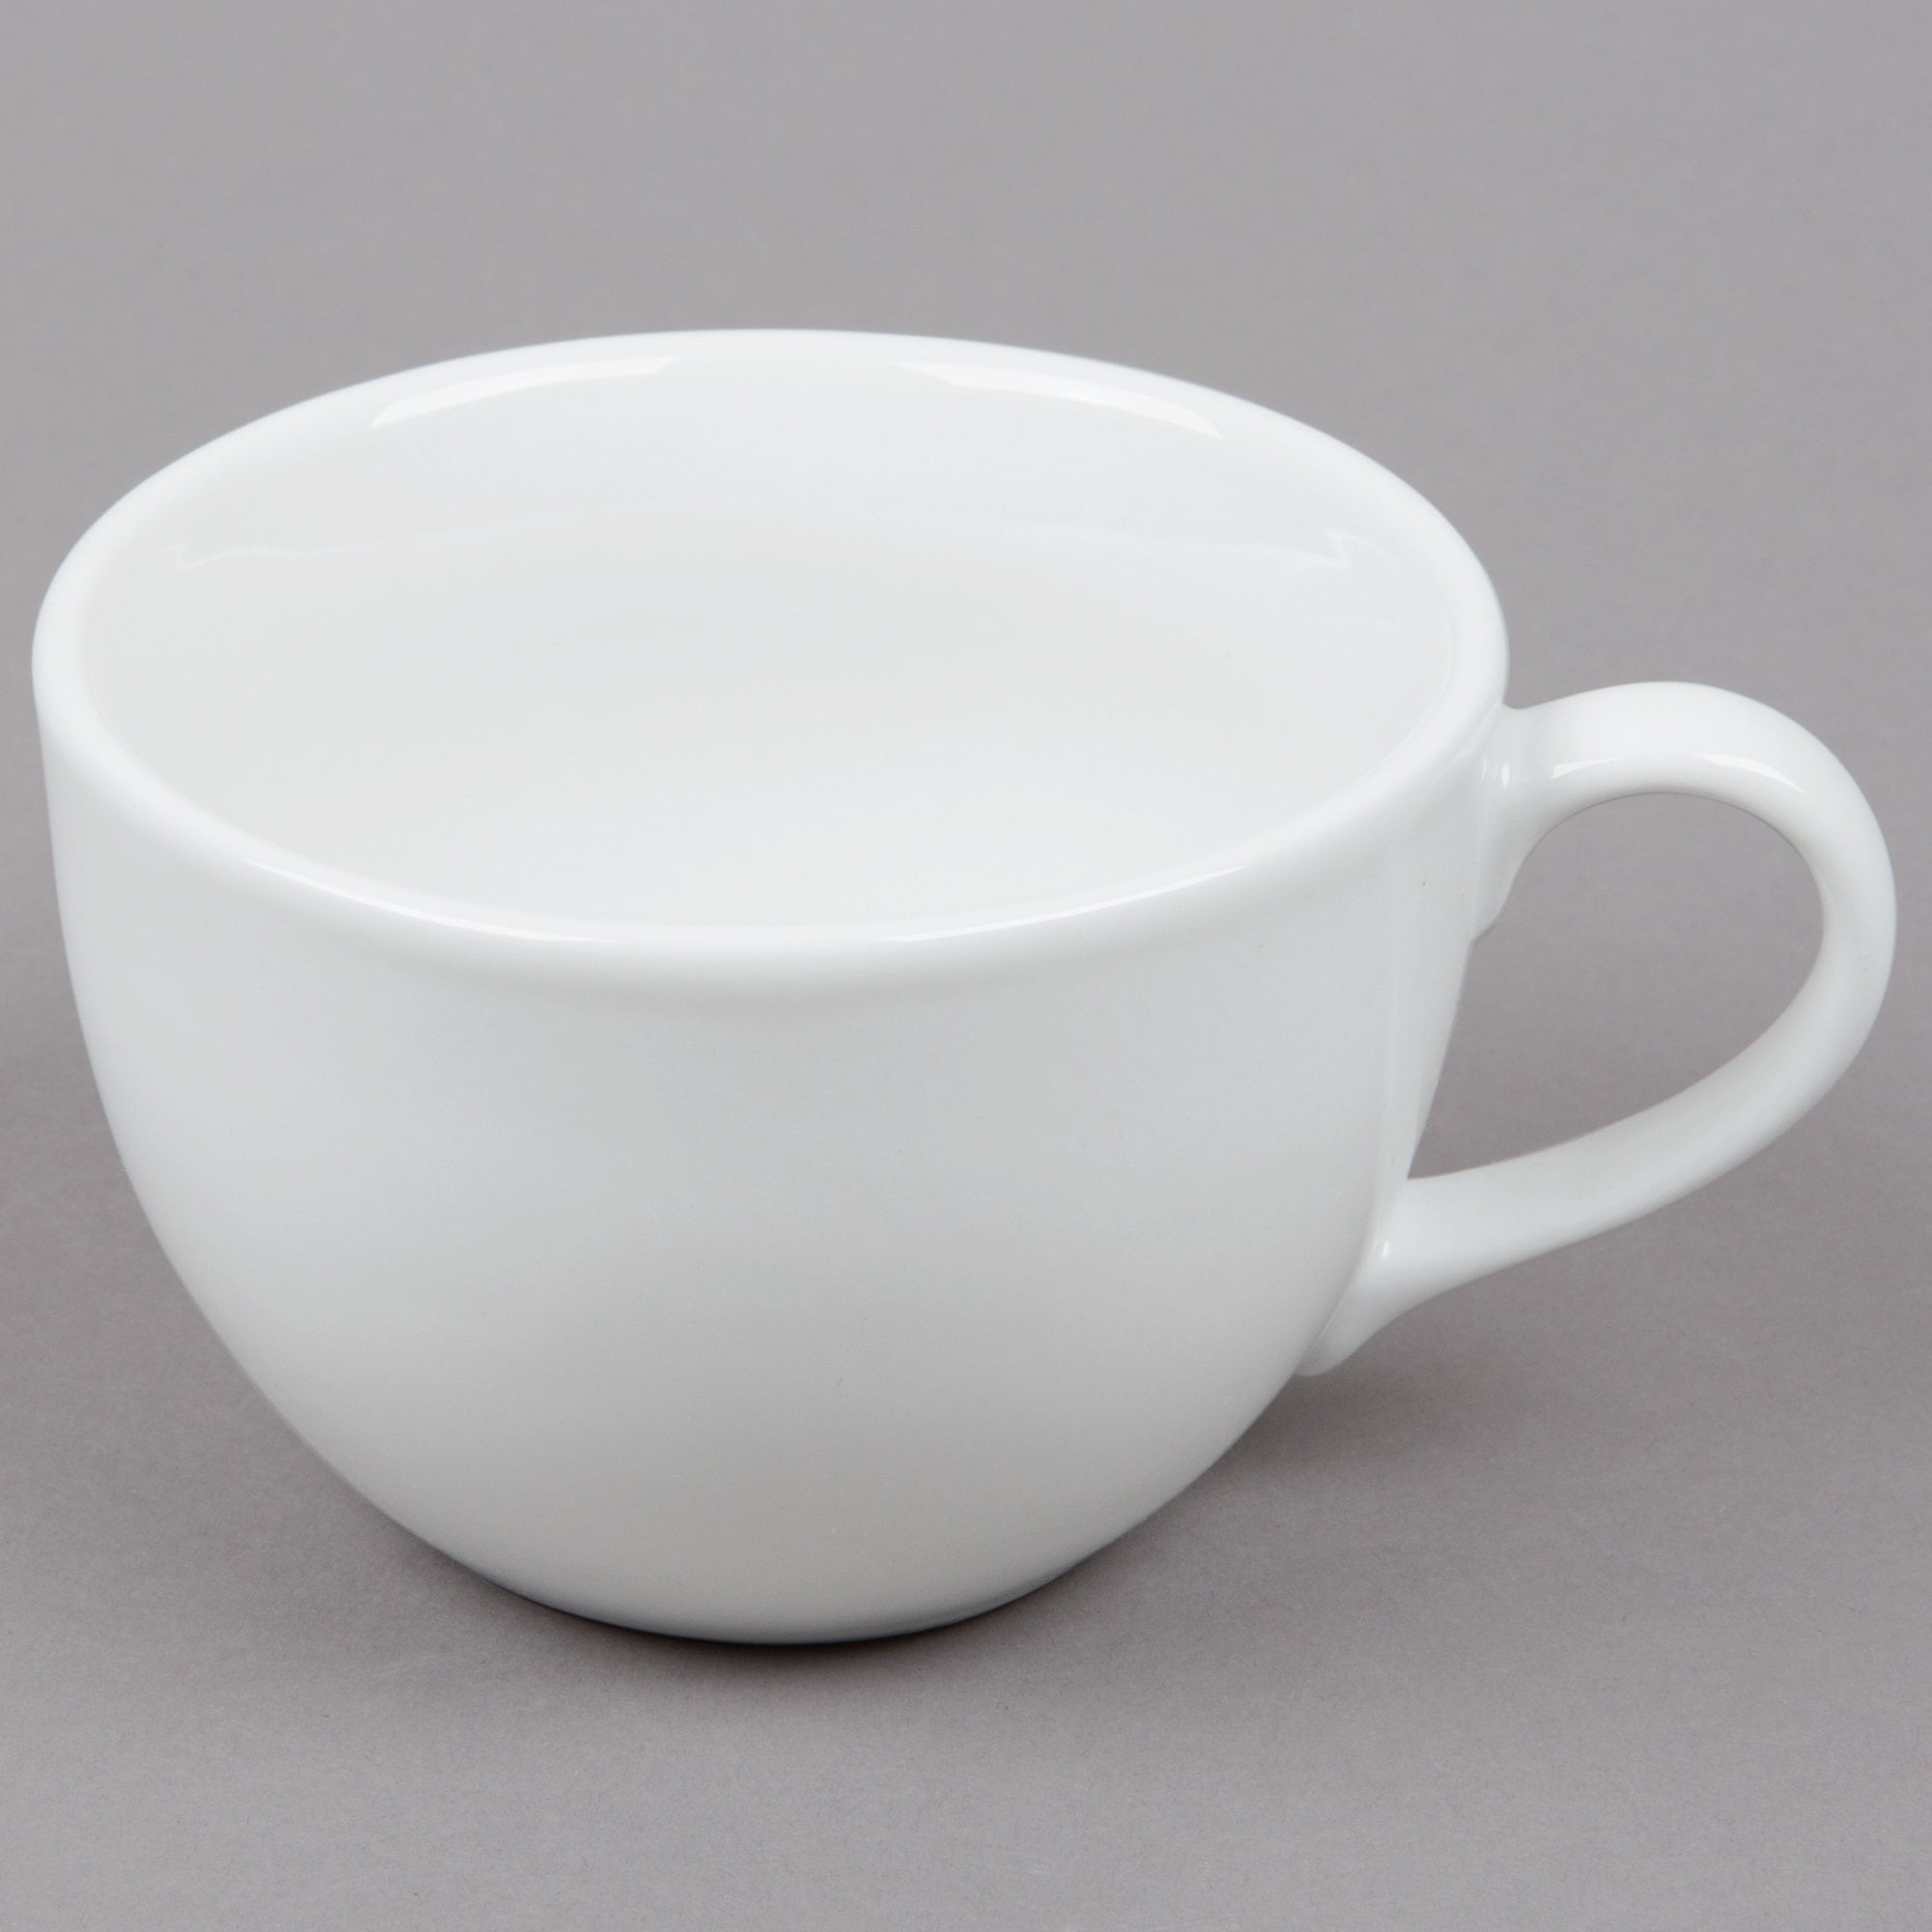 12 / CS Coffee Mug C-1001-W Diamond White 18 Oz Details about   G.E.T 